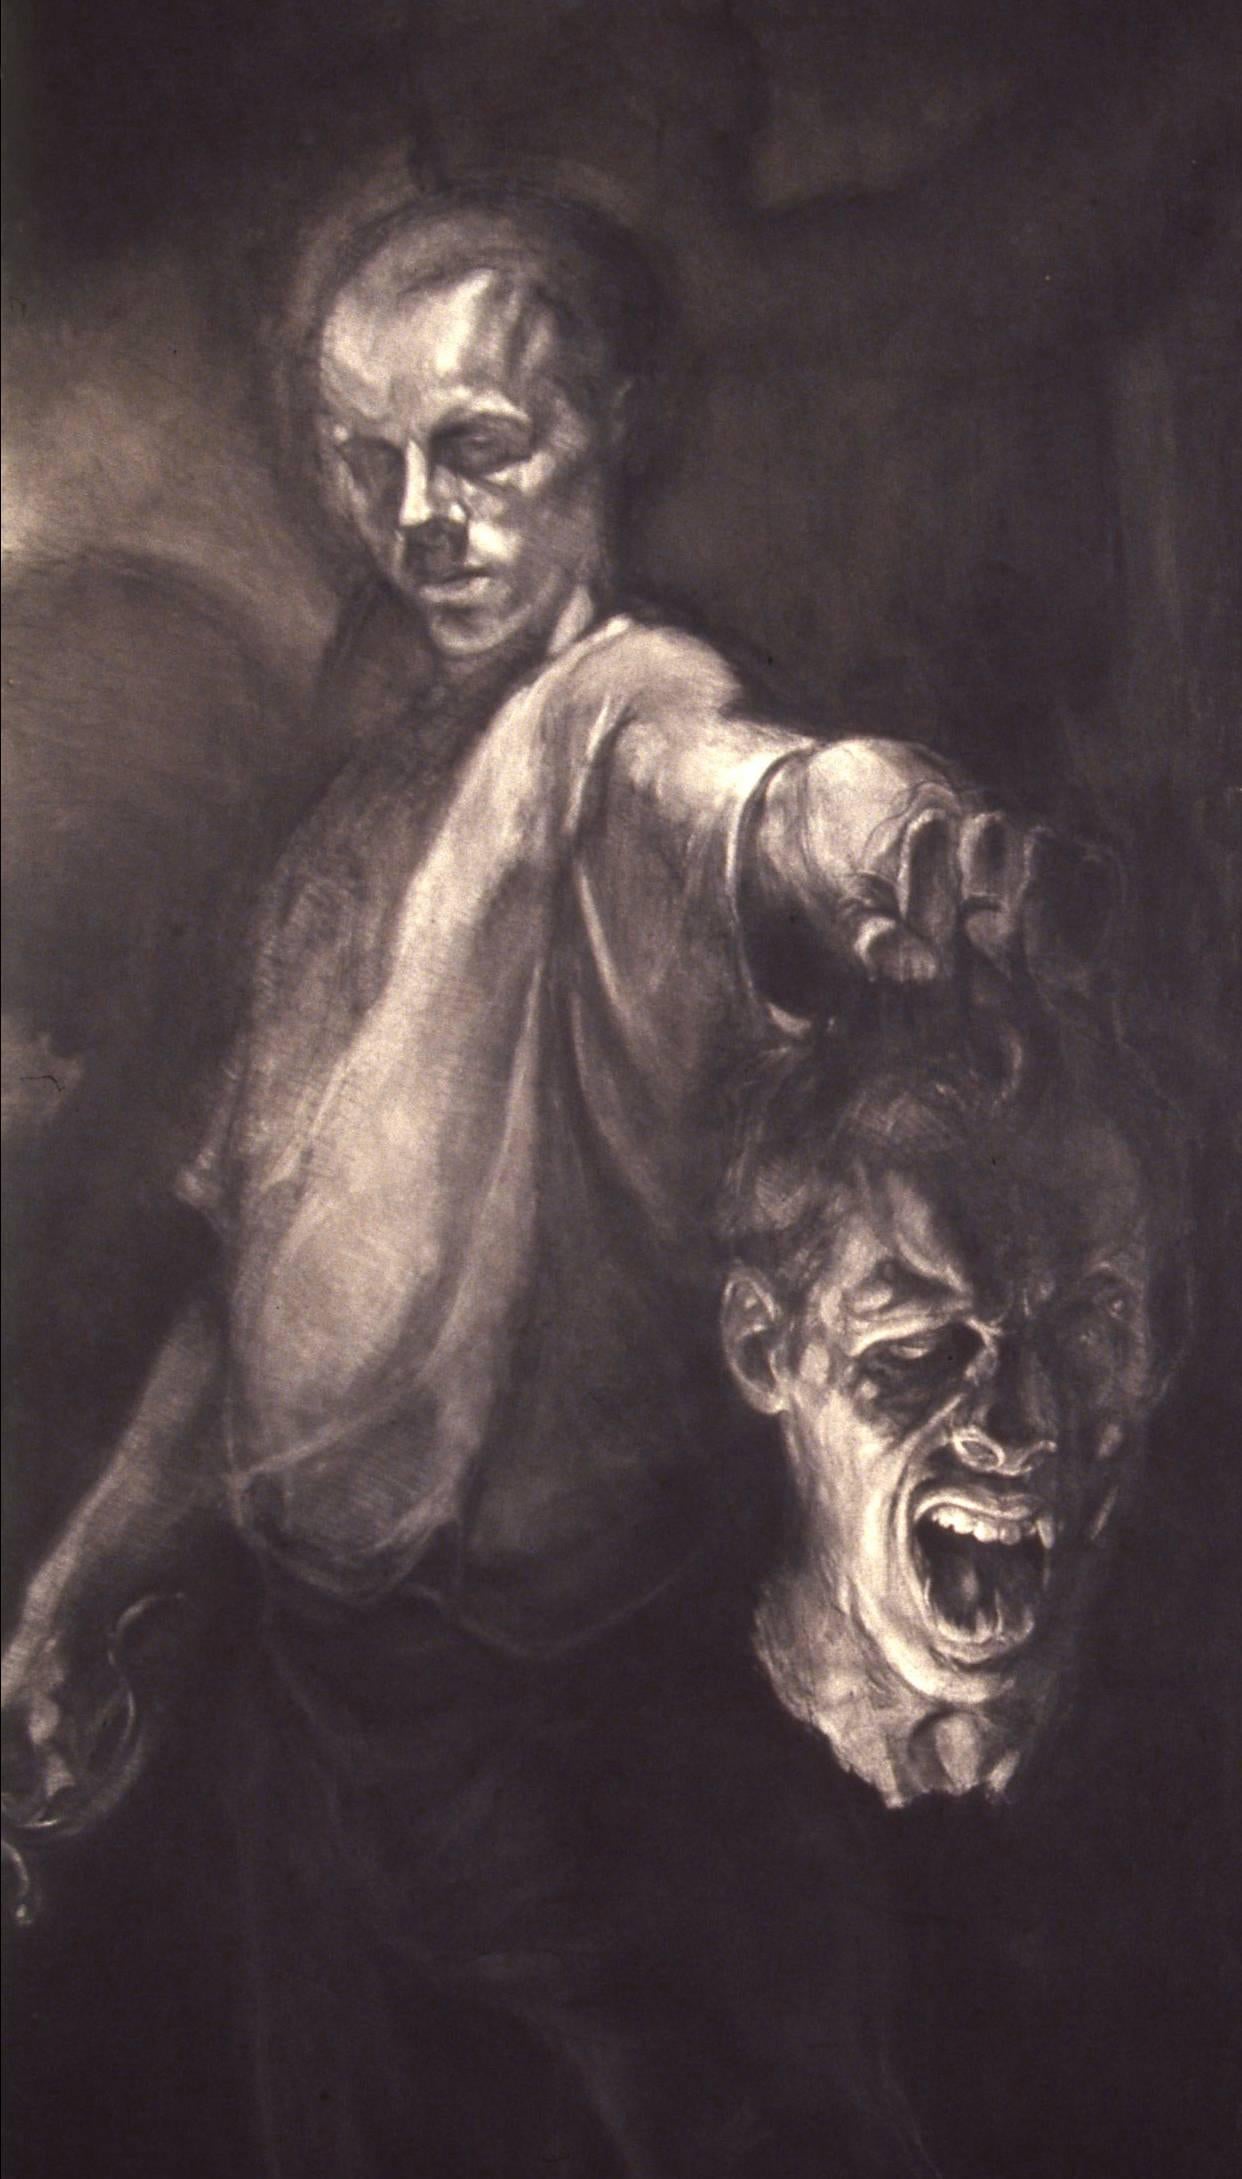 David & Goliath - Double autoportrait monumental d'inspiration Caravaggio, anthracite